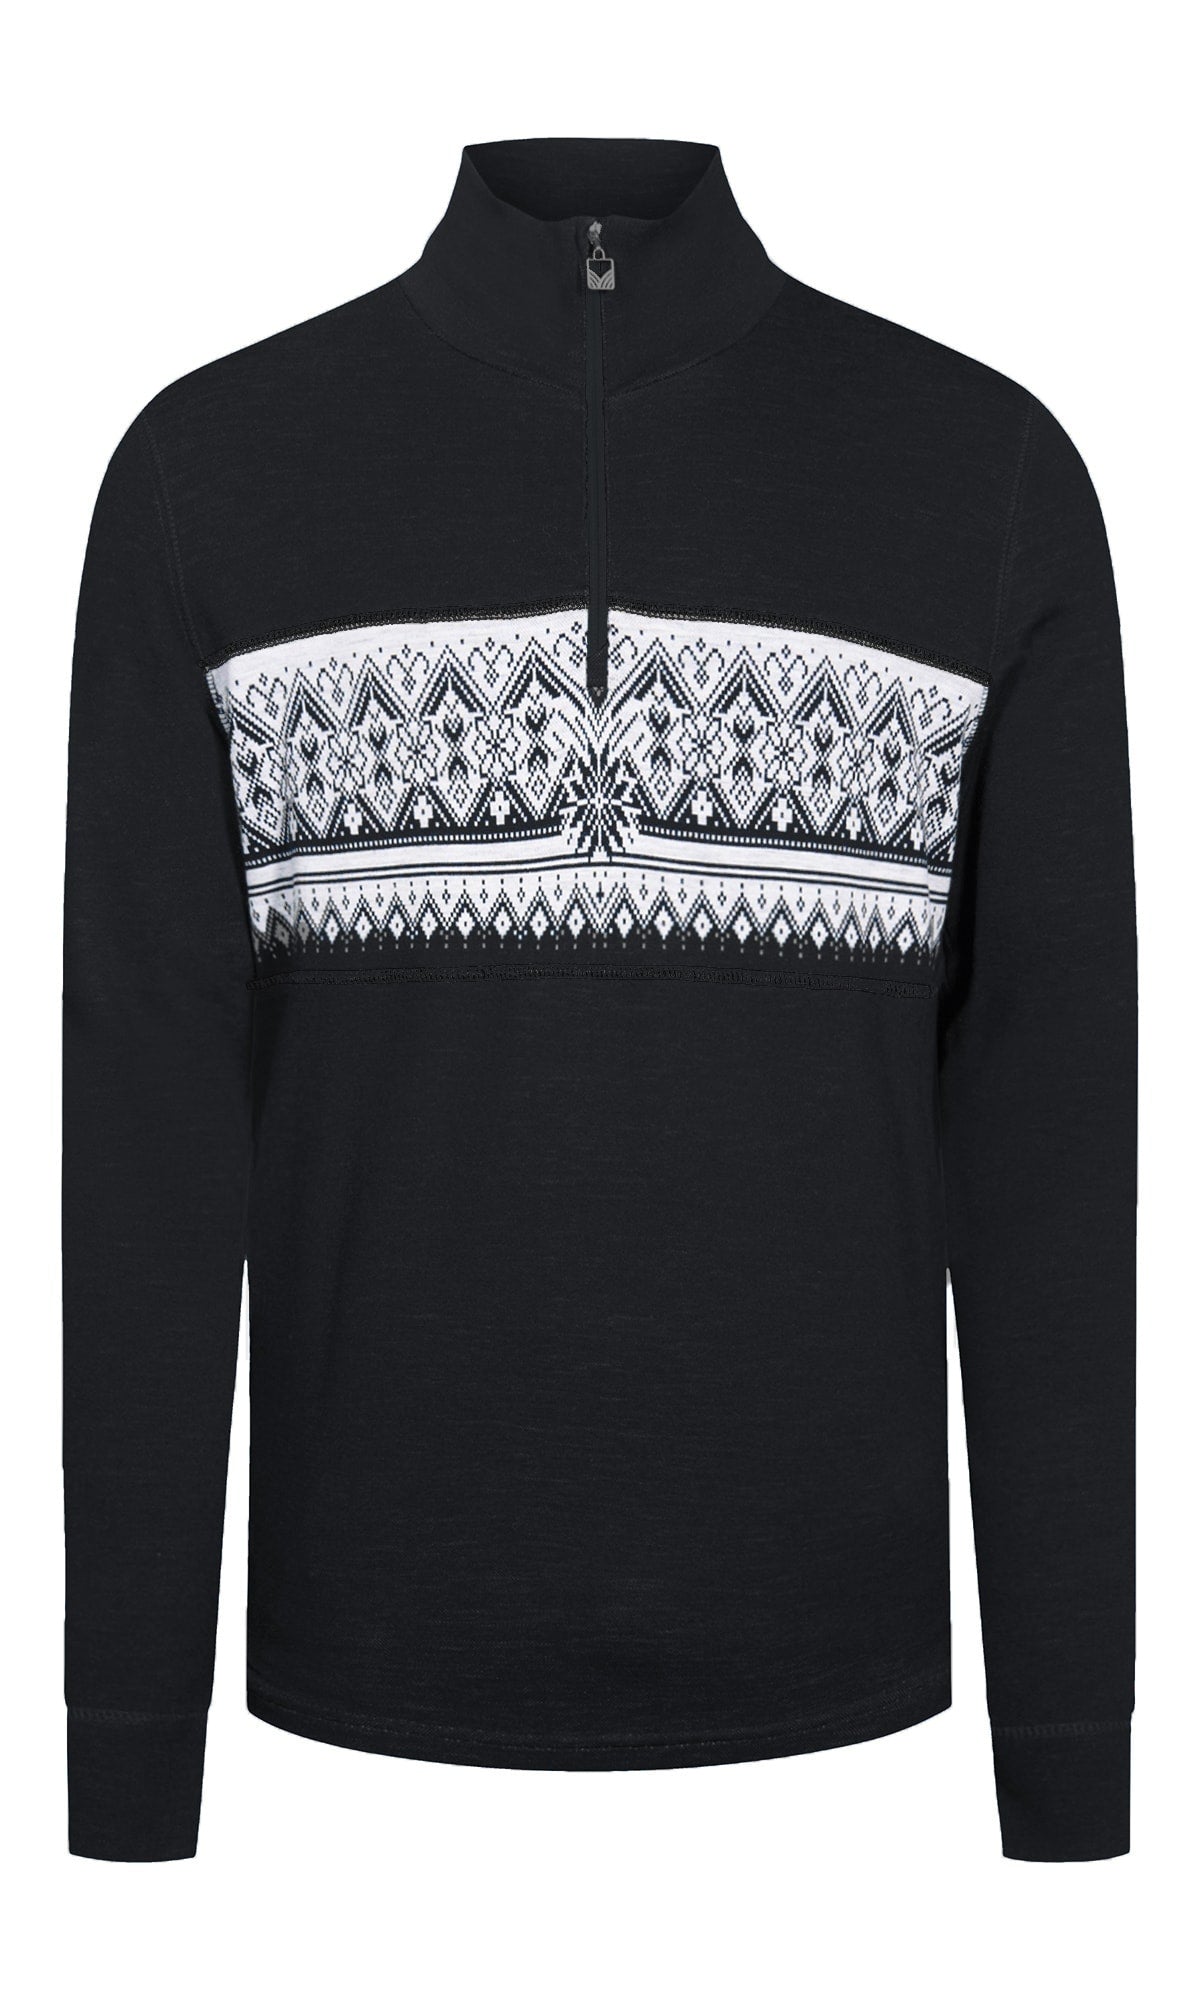 St. Moritz basic masculine sweater